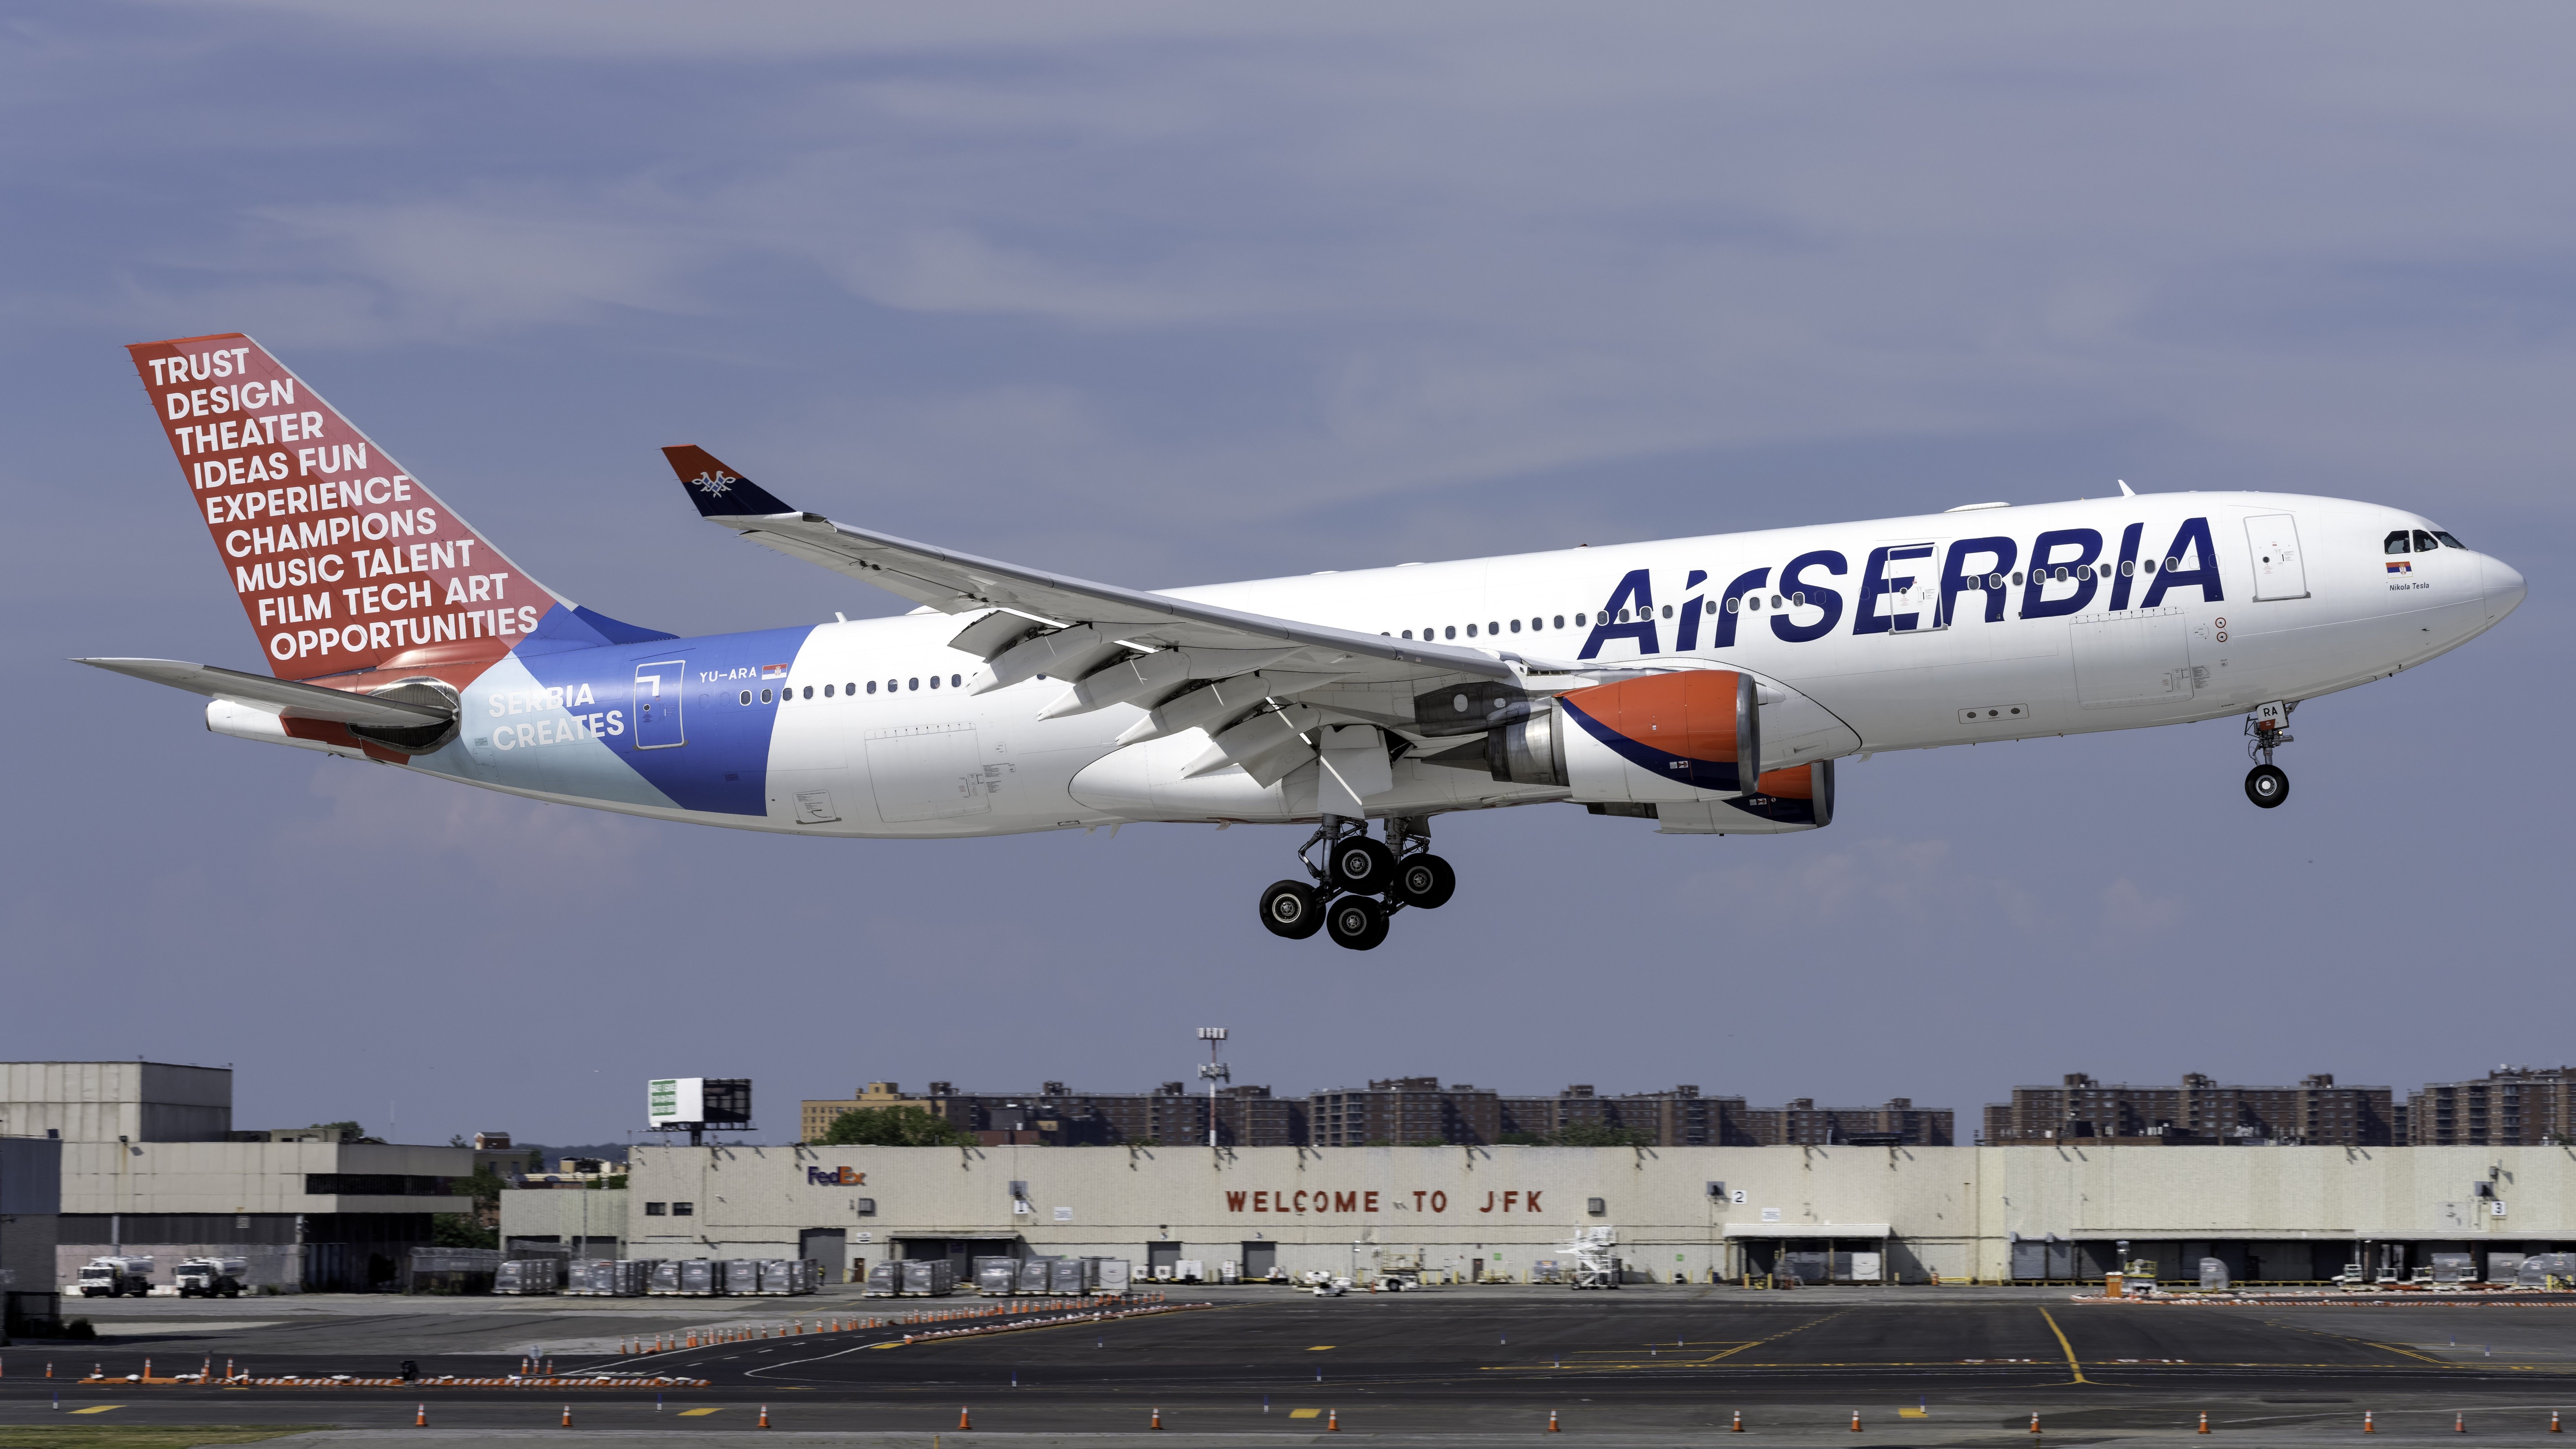 Airserbia com купить билет. A330 Air Serbia. Airbus a319 Air Serbia. Е195 AIRSERBIA. A330 Tail.